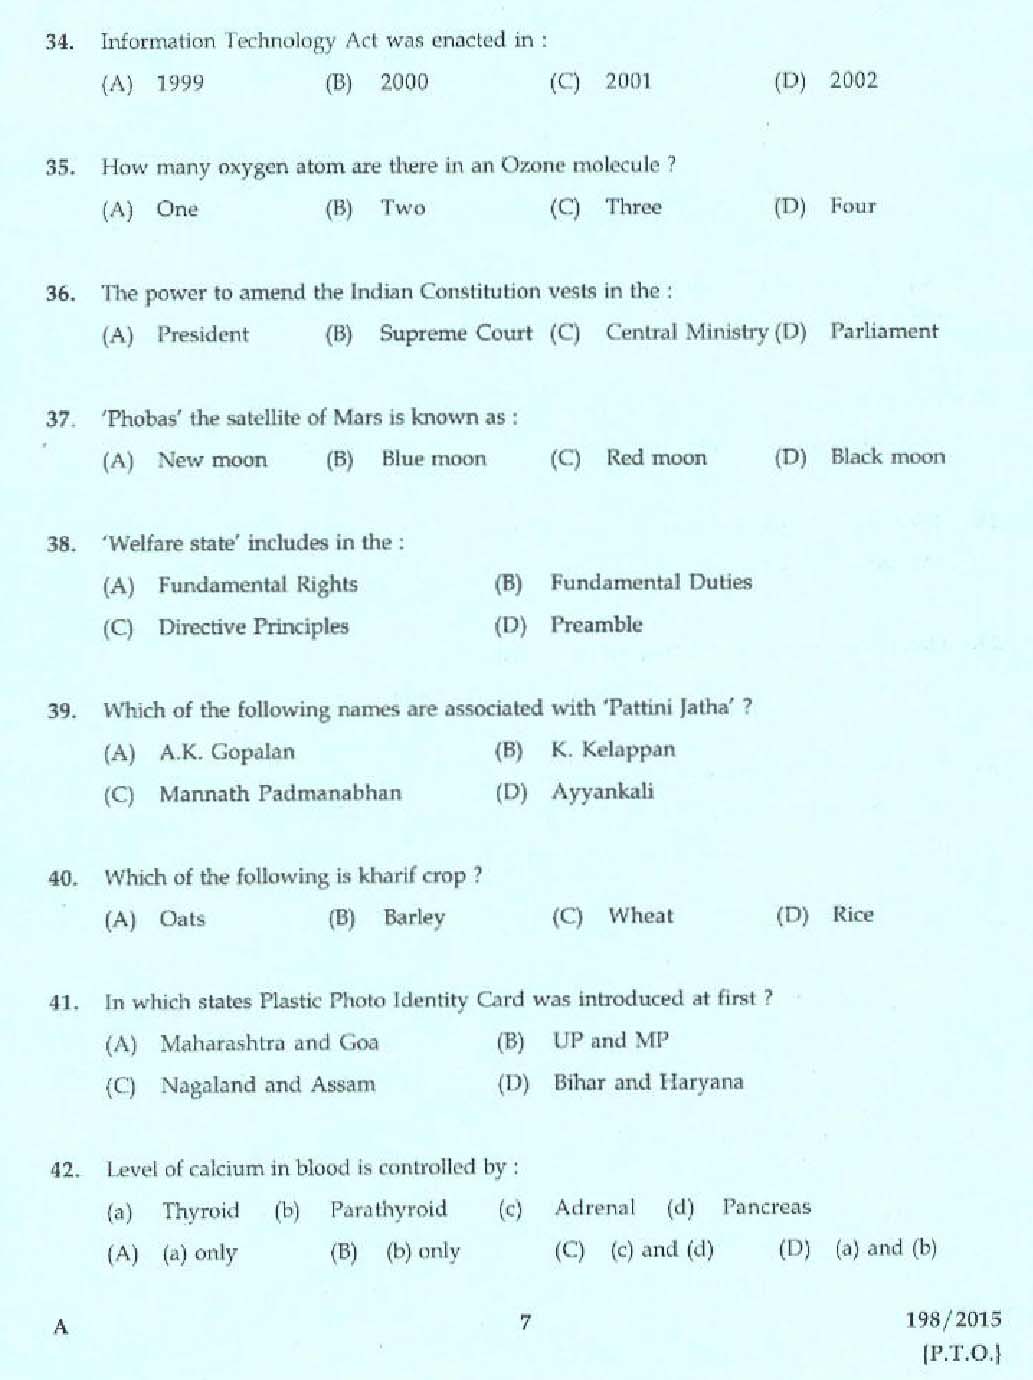 Kerala PSC Telephone Operator Exam Question Code 1982015 5